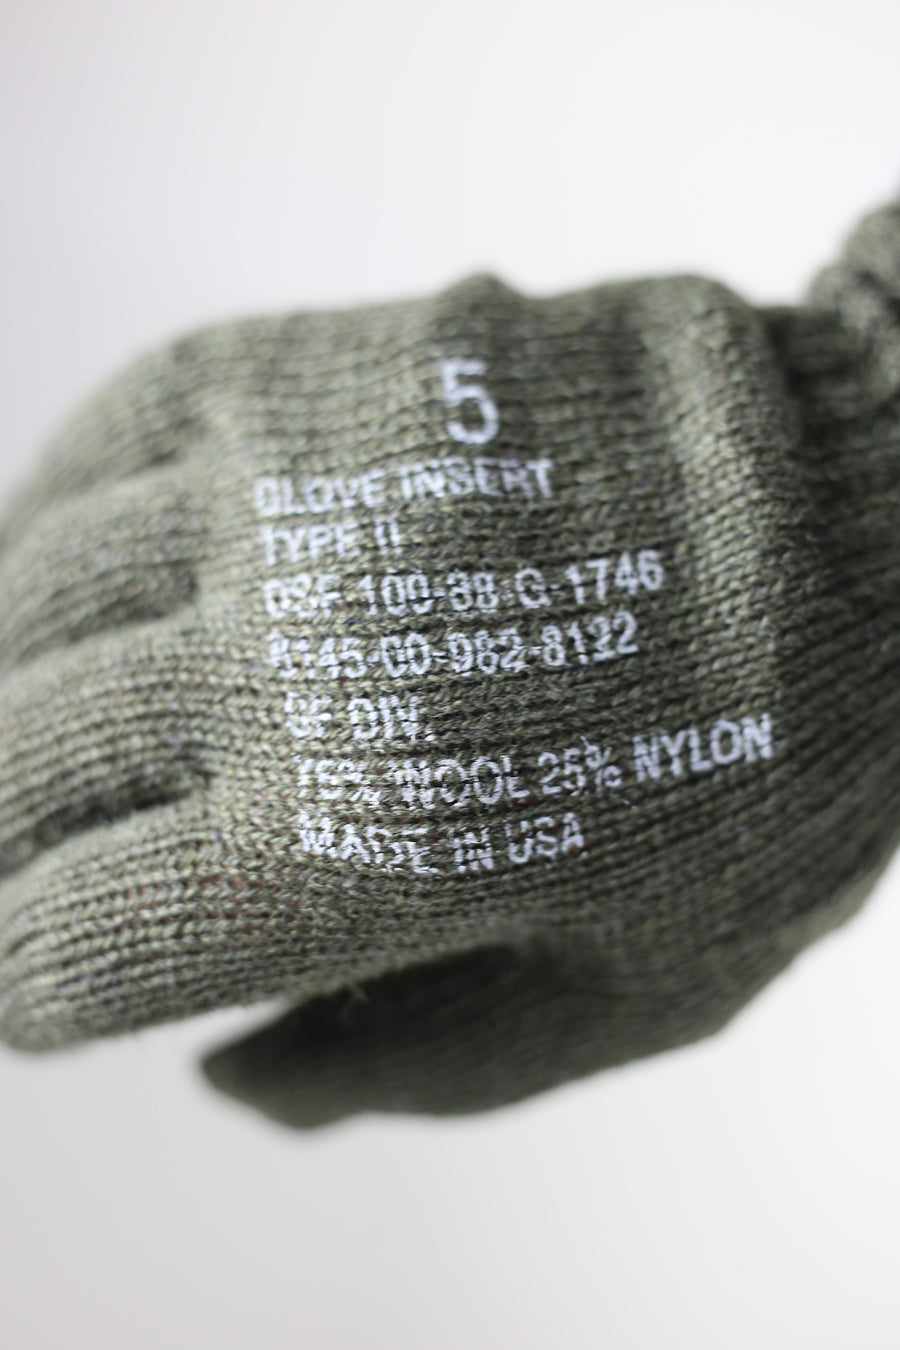 Vintage Deadstock 1980s US Army wool gloves